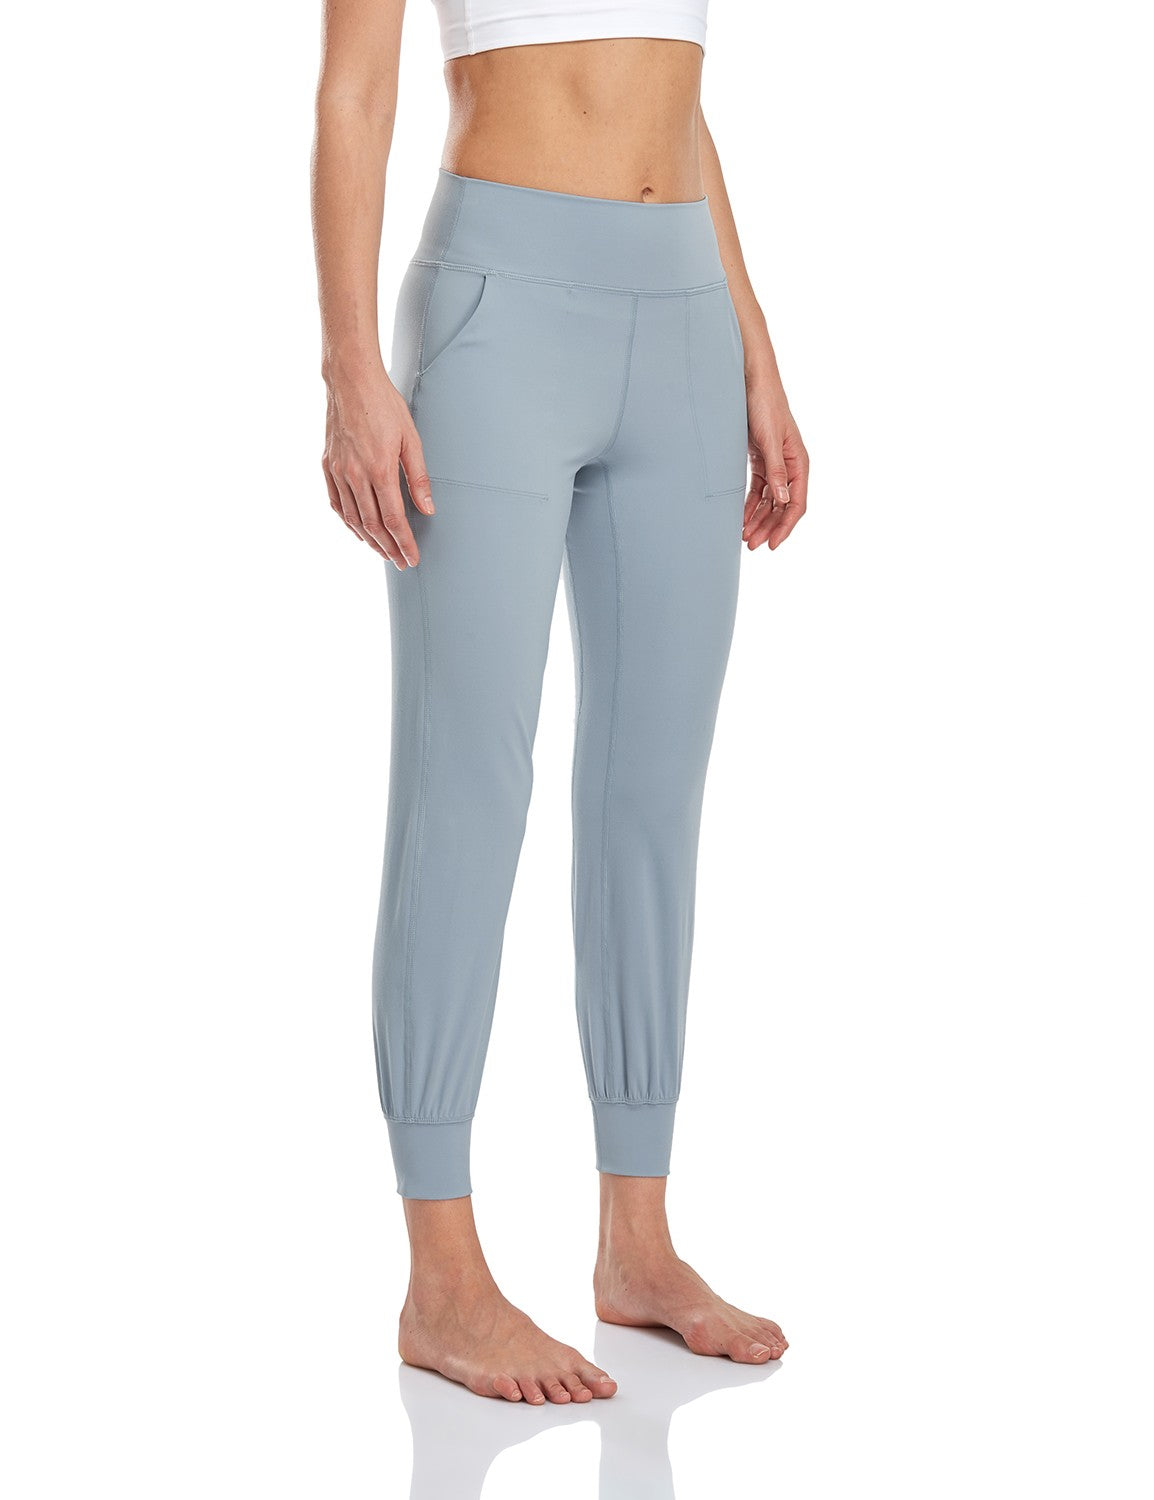 HeyNuts Essential Yoga 4/6 Leggings S Buttery Soft Hawthorn Athletic  BluePants